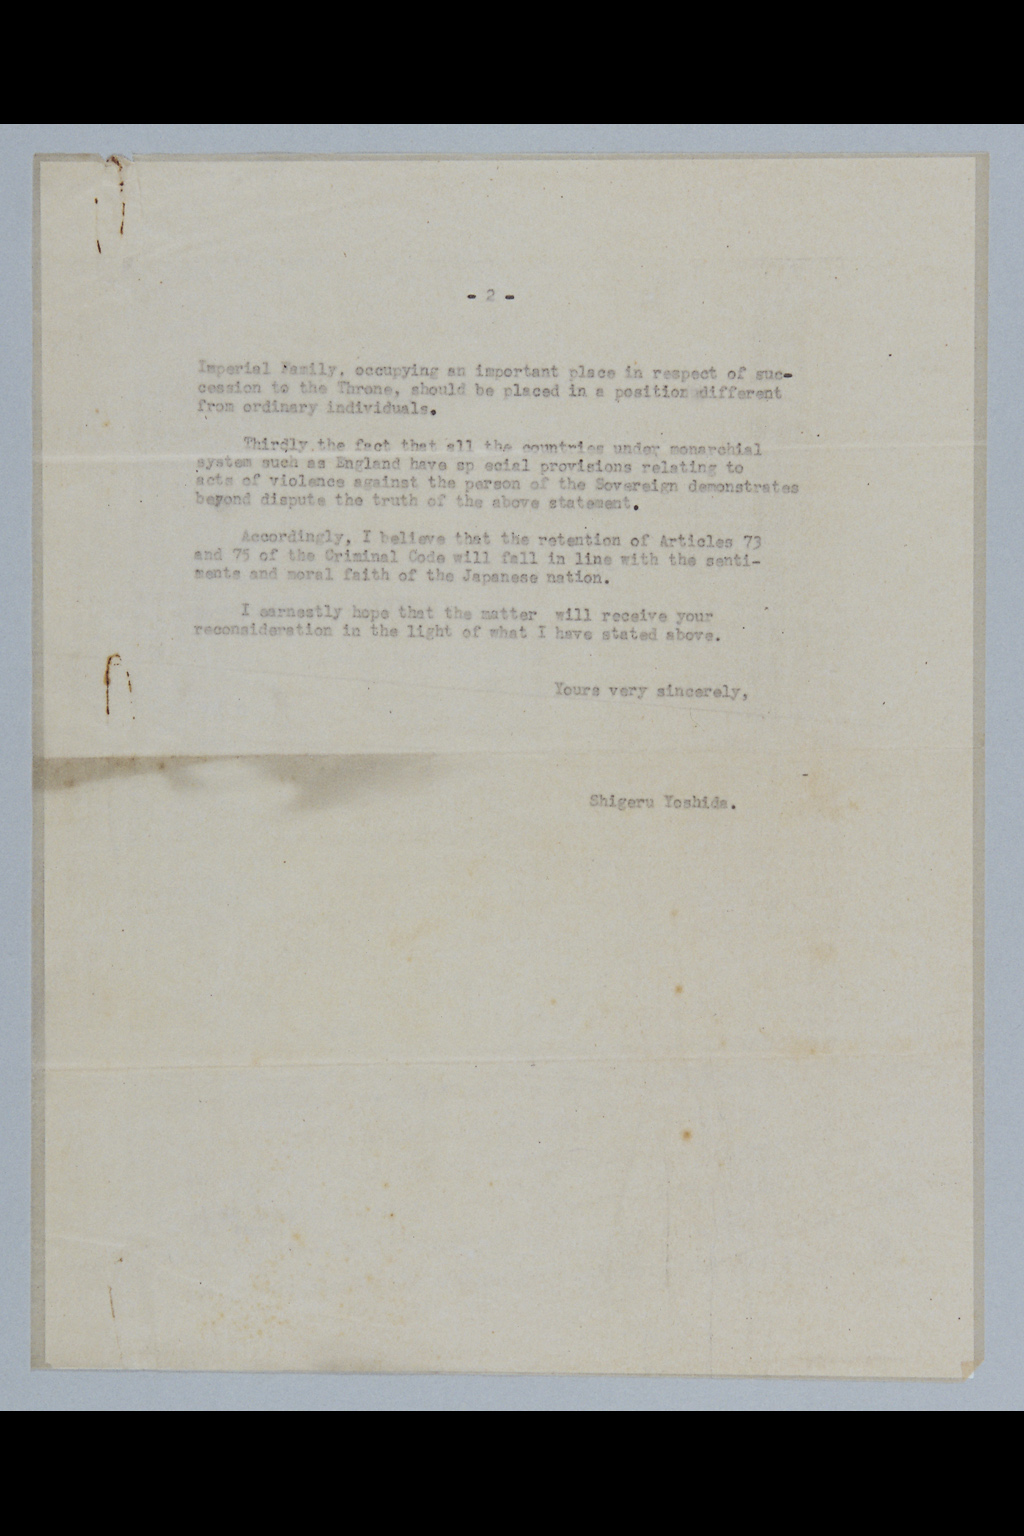 『Letter from Shigeru Yoshida to General MacArthur dated December 27, 1946』(拡大画像)